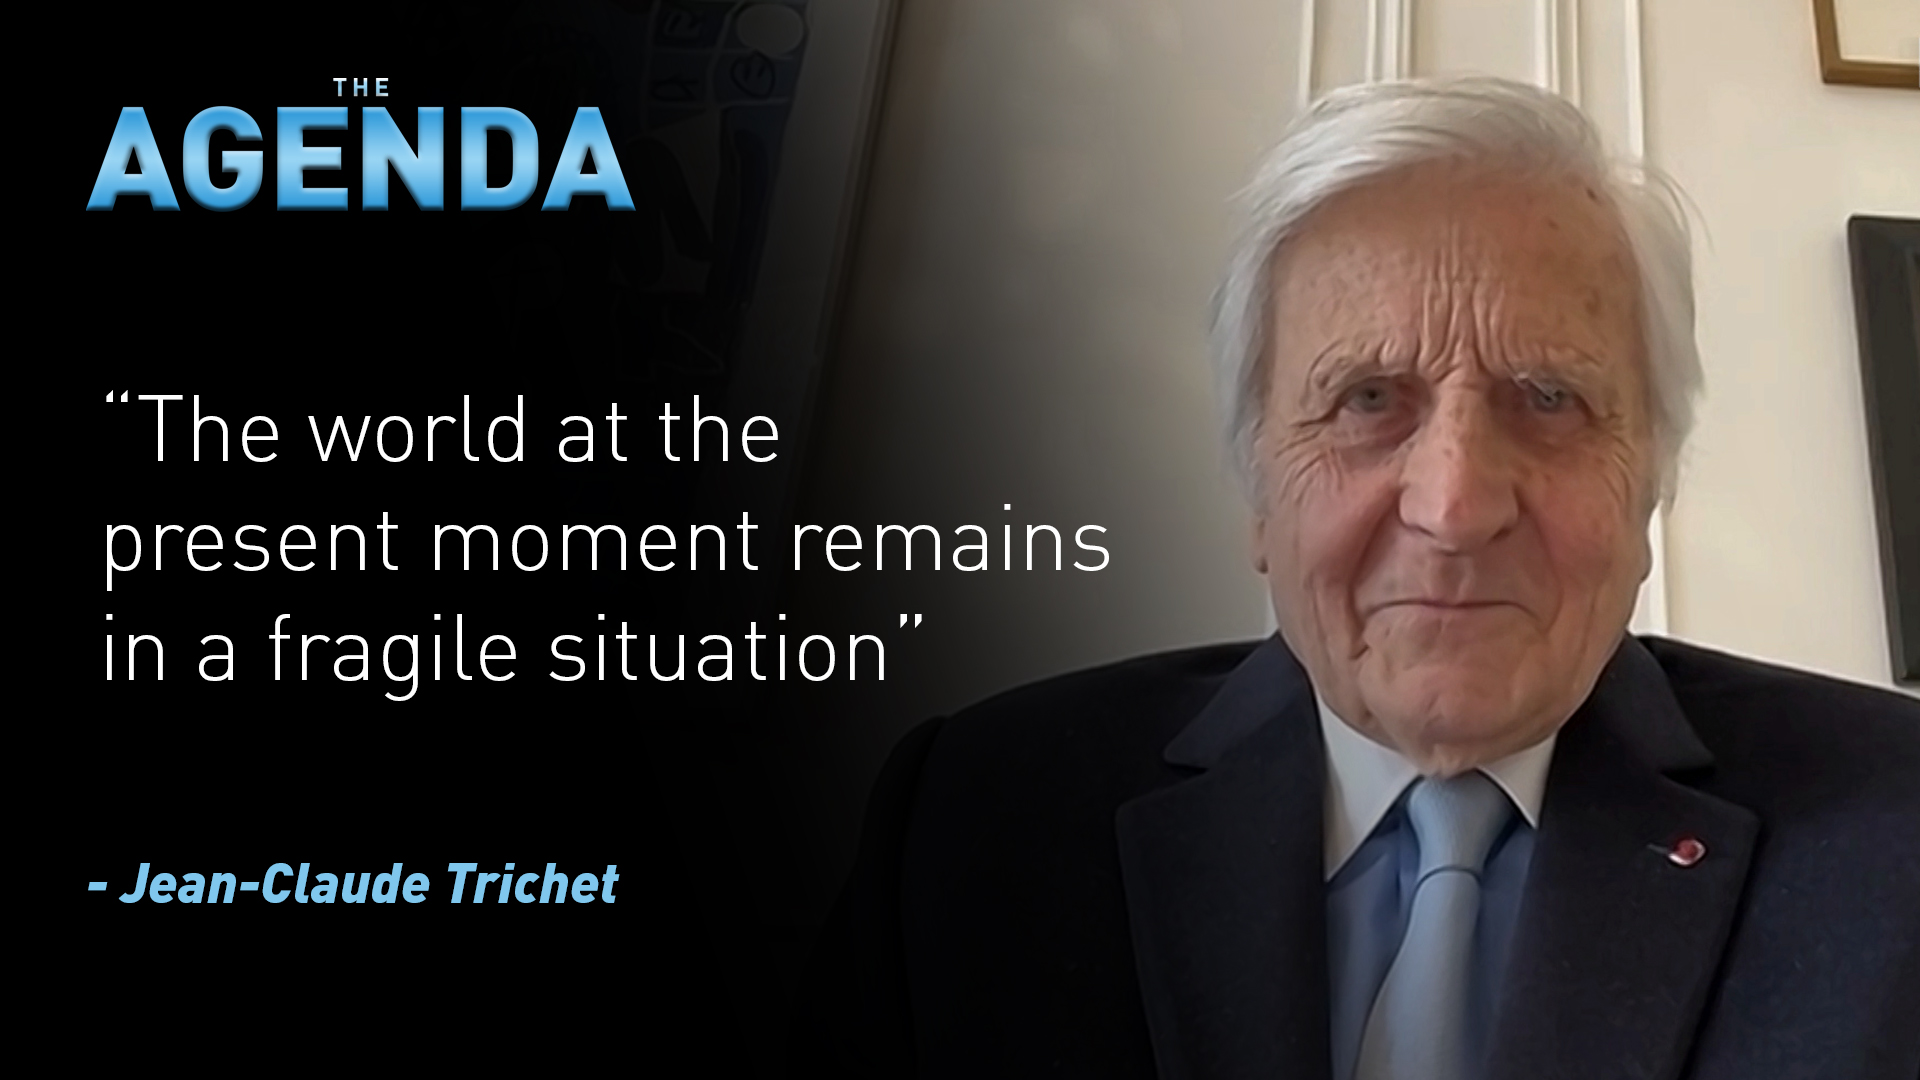 Face to Face: Jean-Claude Trichet – The Agenda full episode